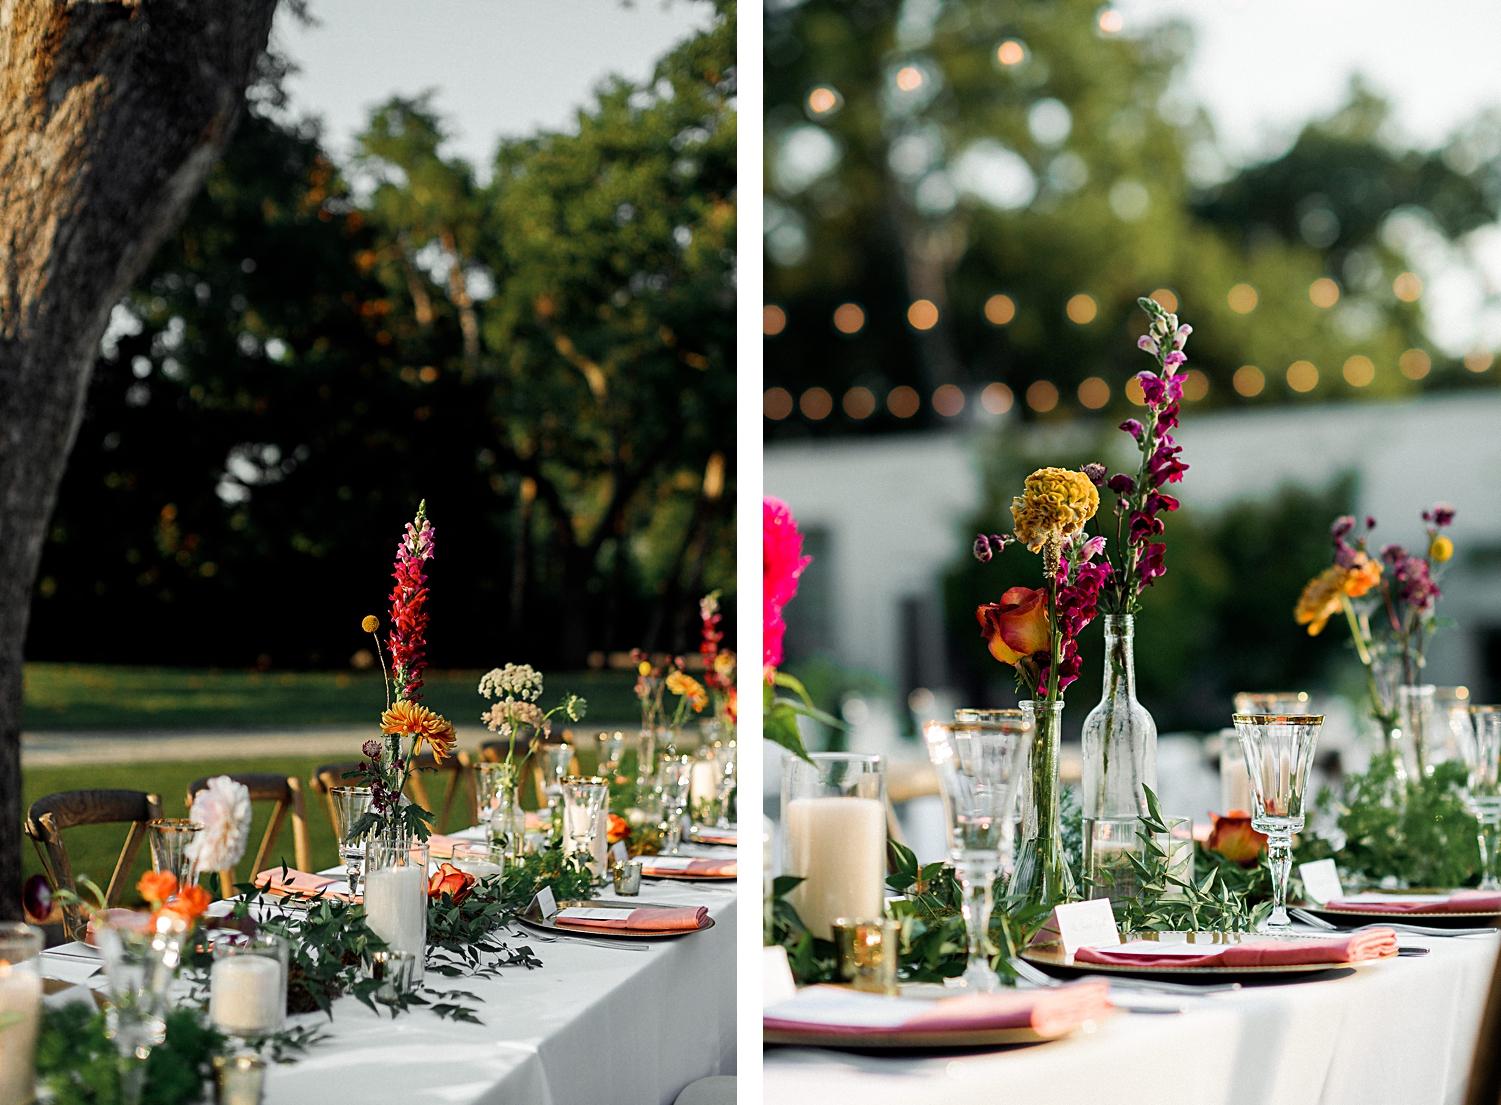 colorful wedding reception table setting decor dallas arboretum outdoor centerpiece florals